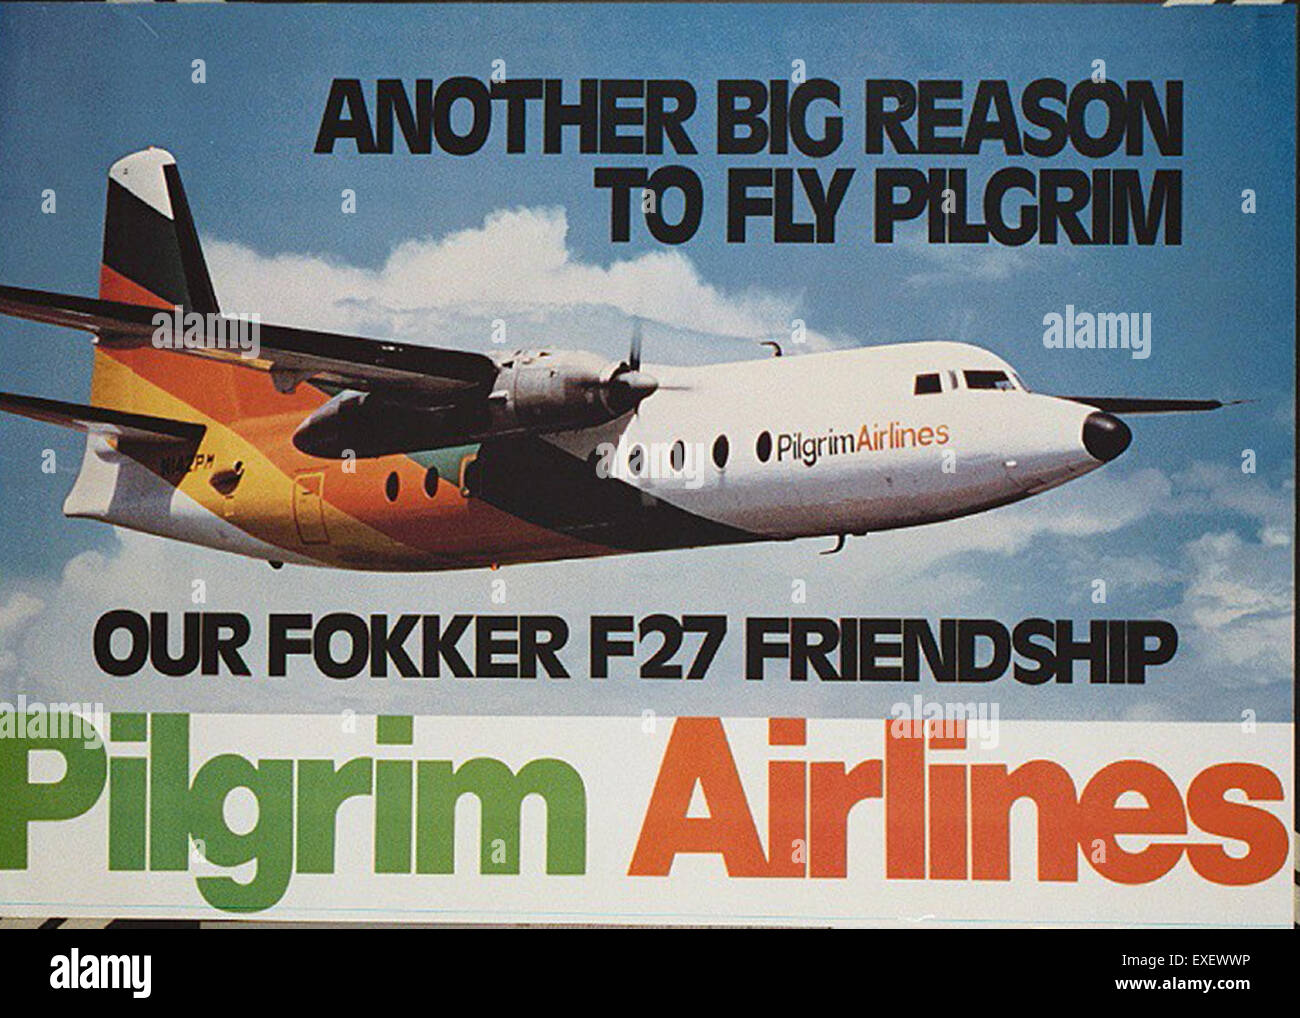 Pilgrim Airlines Poster Stock Photo